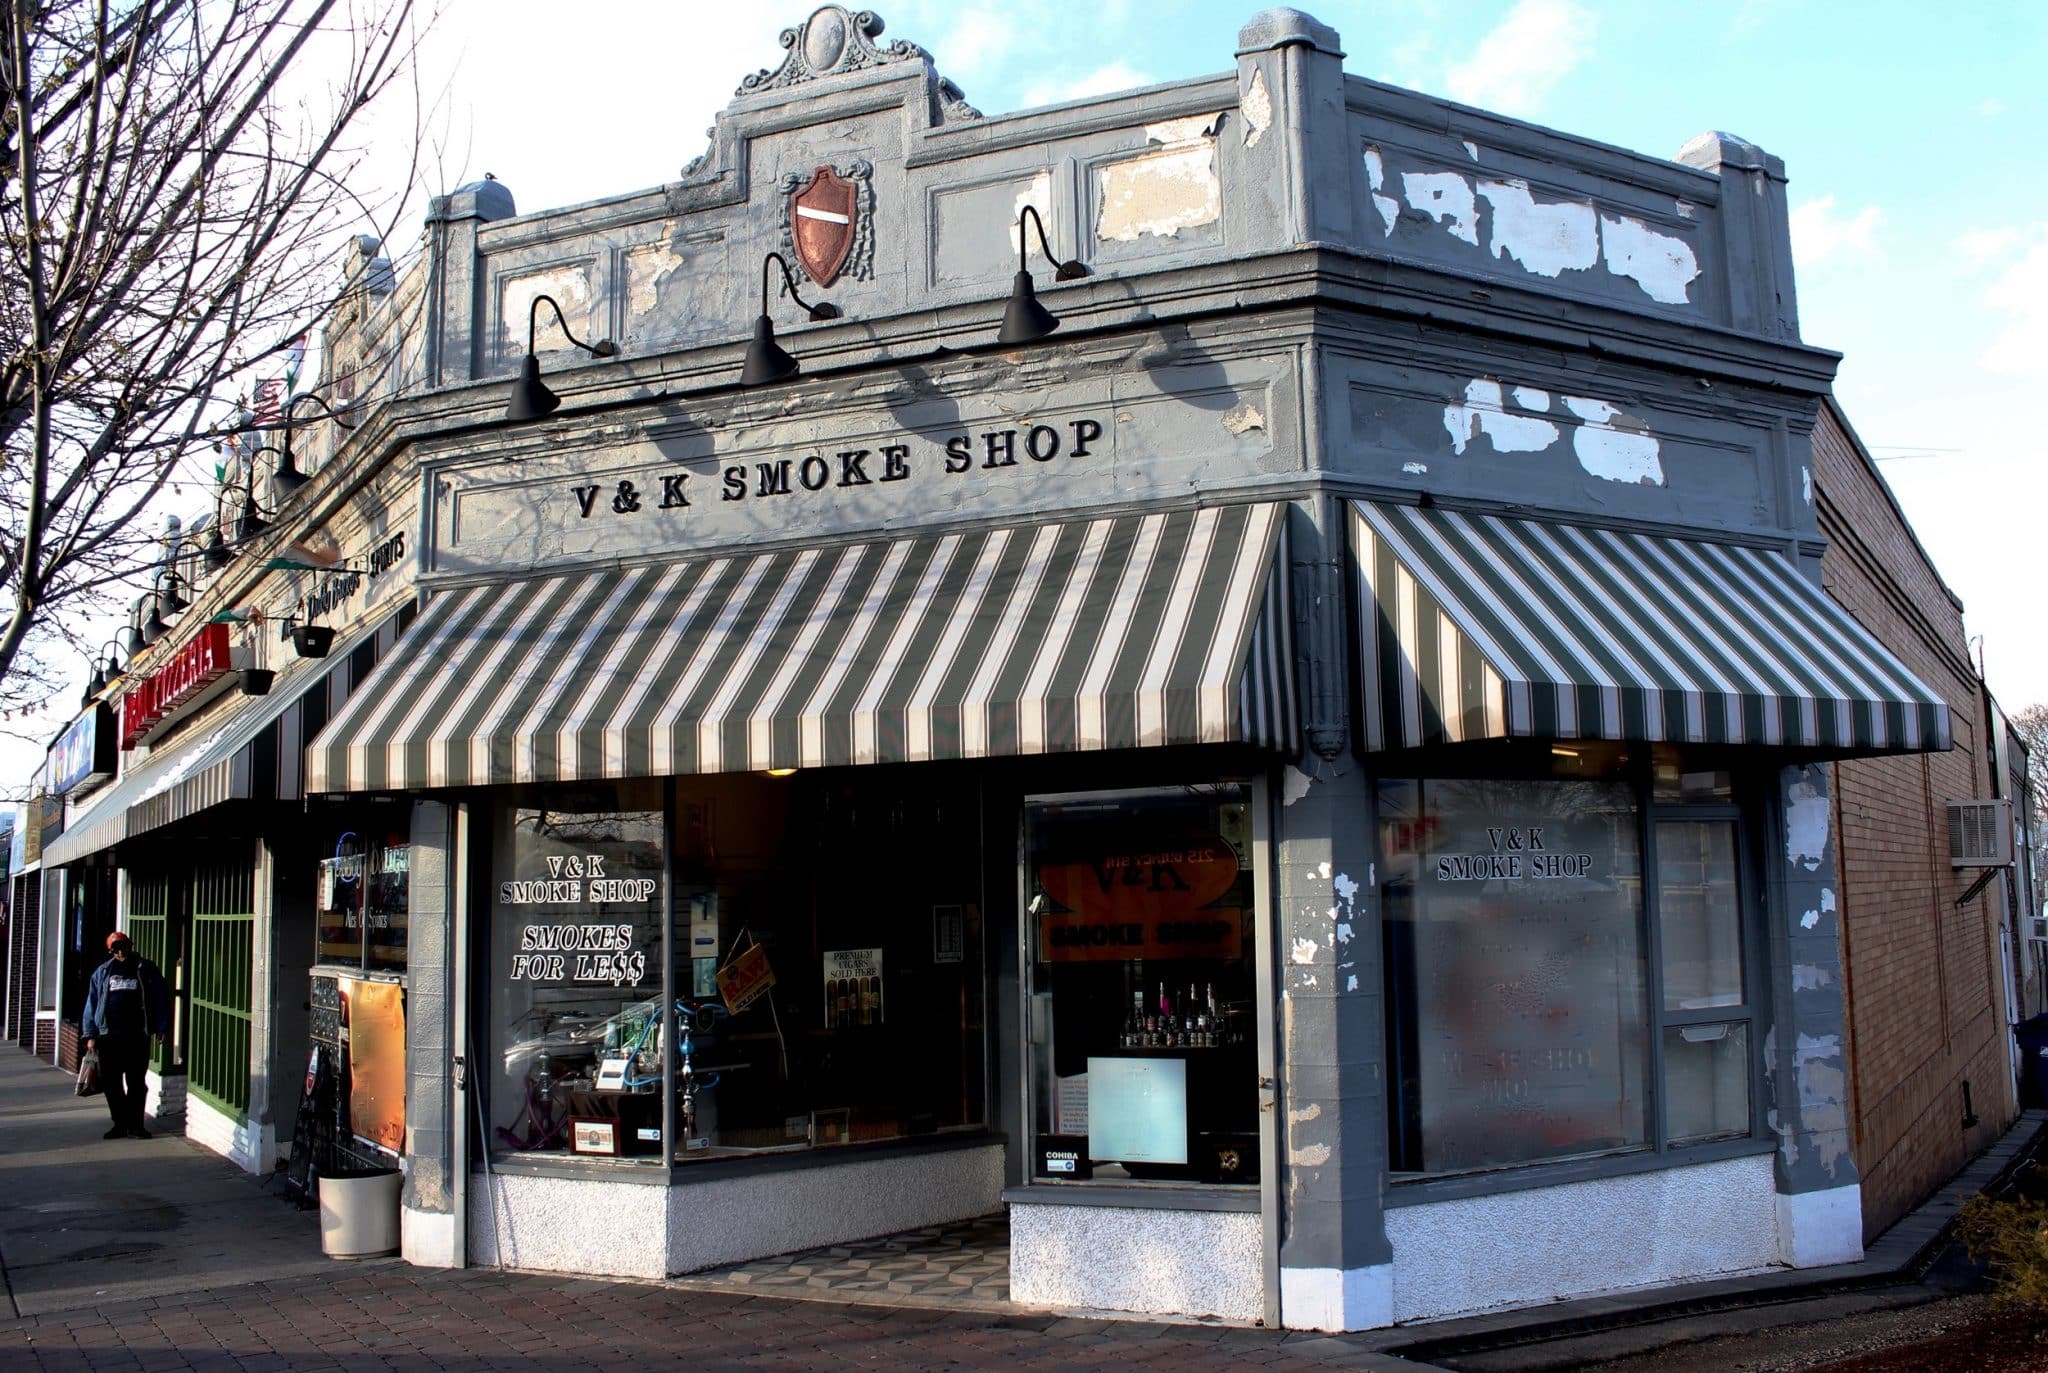 V & K Smoke Shop,1576 Hancock St, Quincy, MA 02169, United States